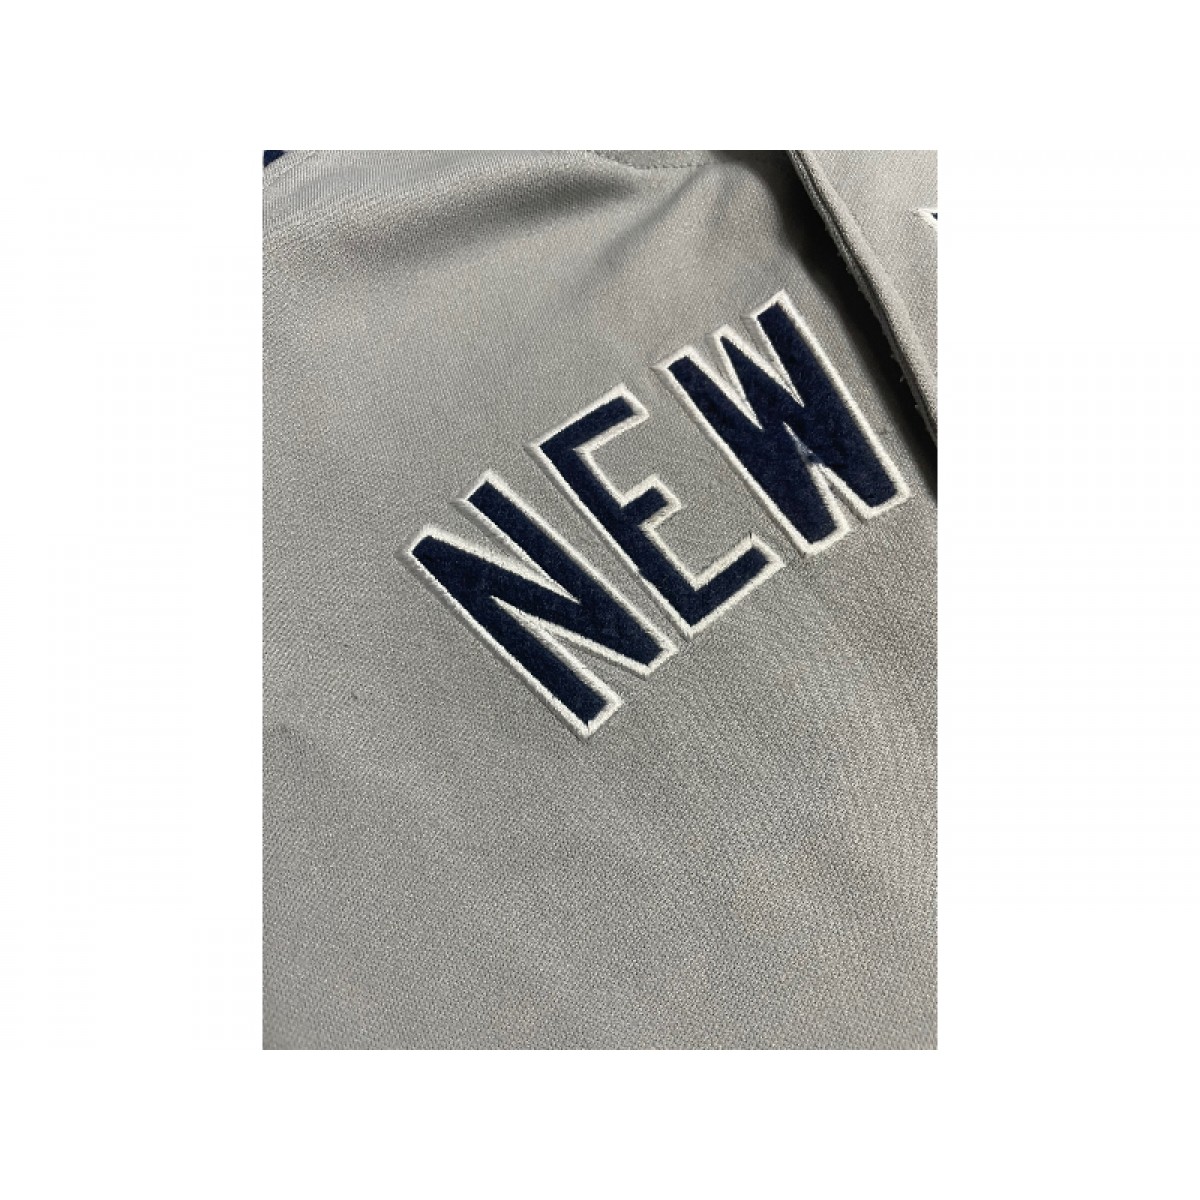 veste baseball NewYork Yankees / medium 